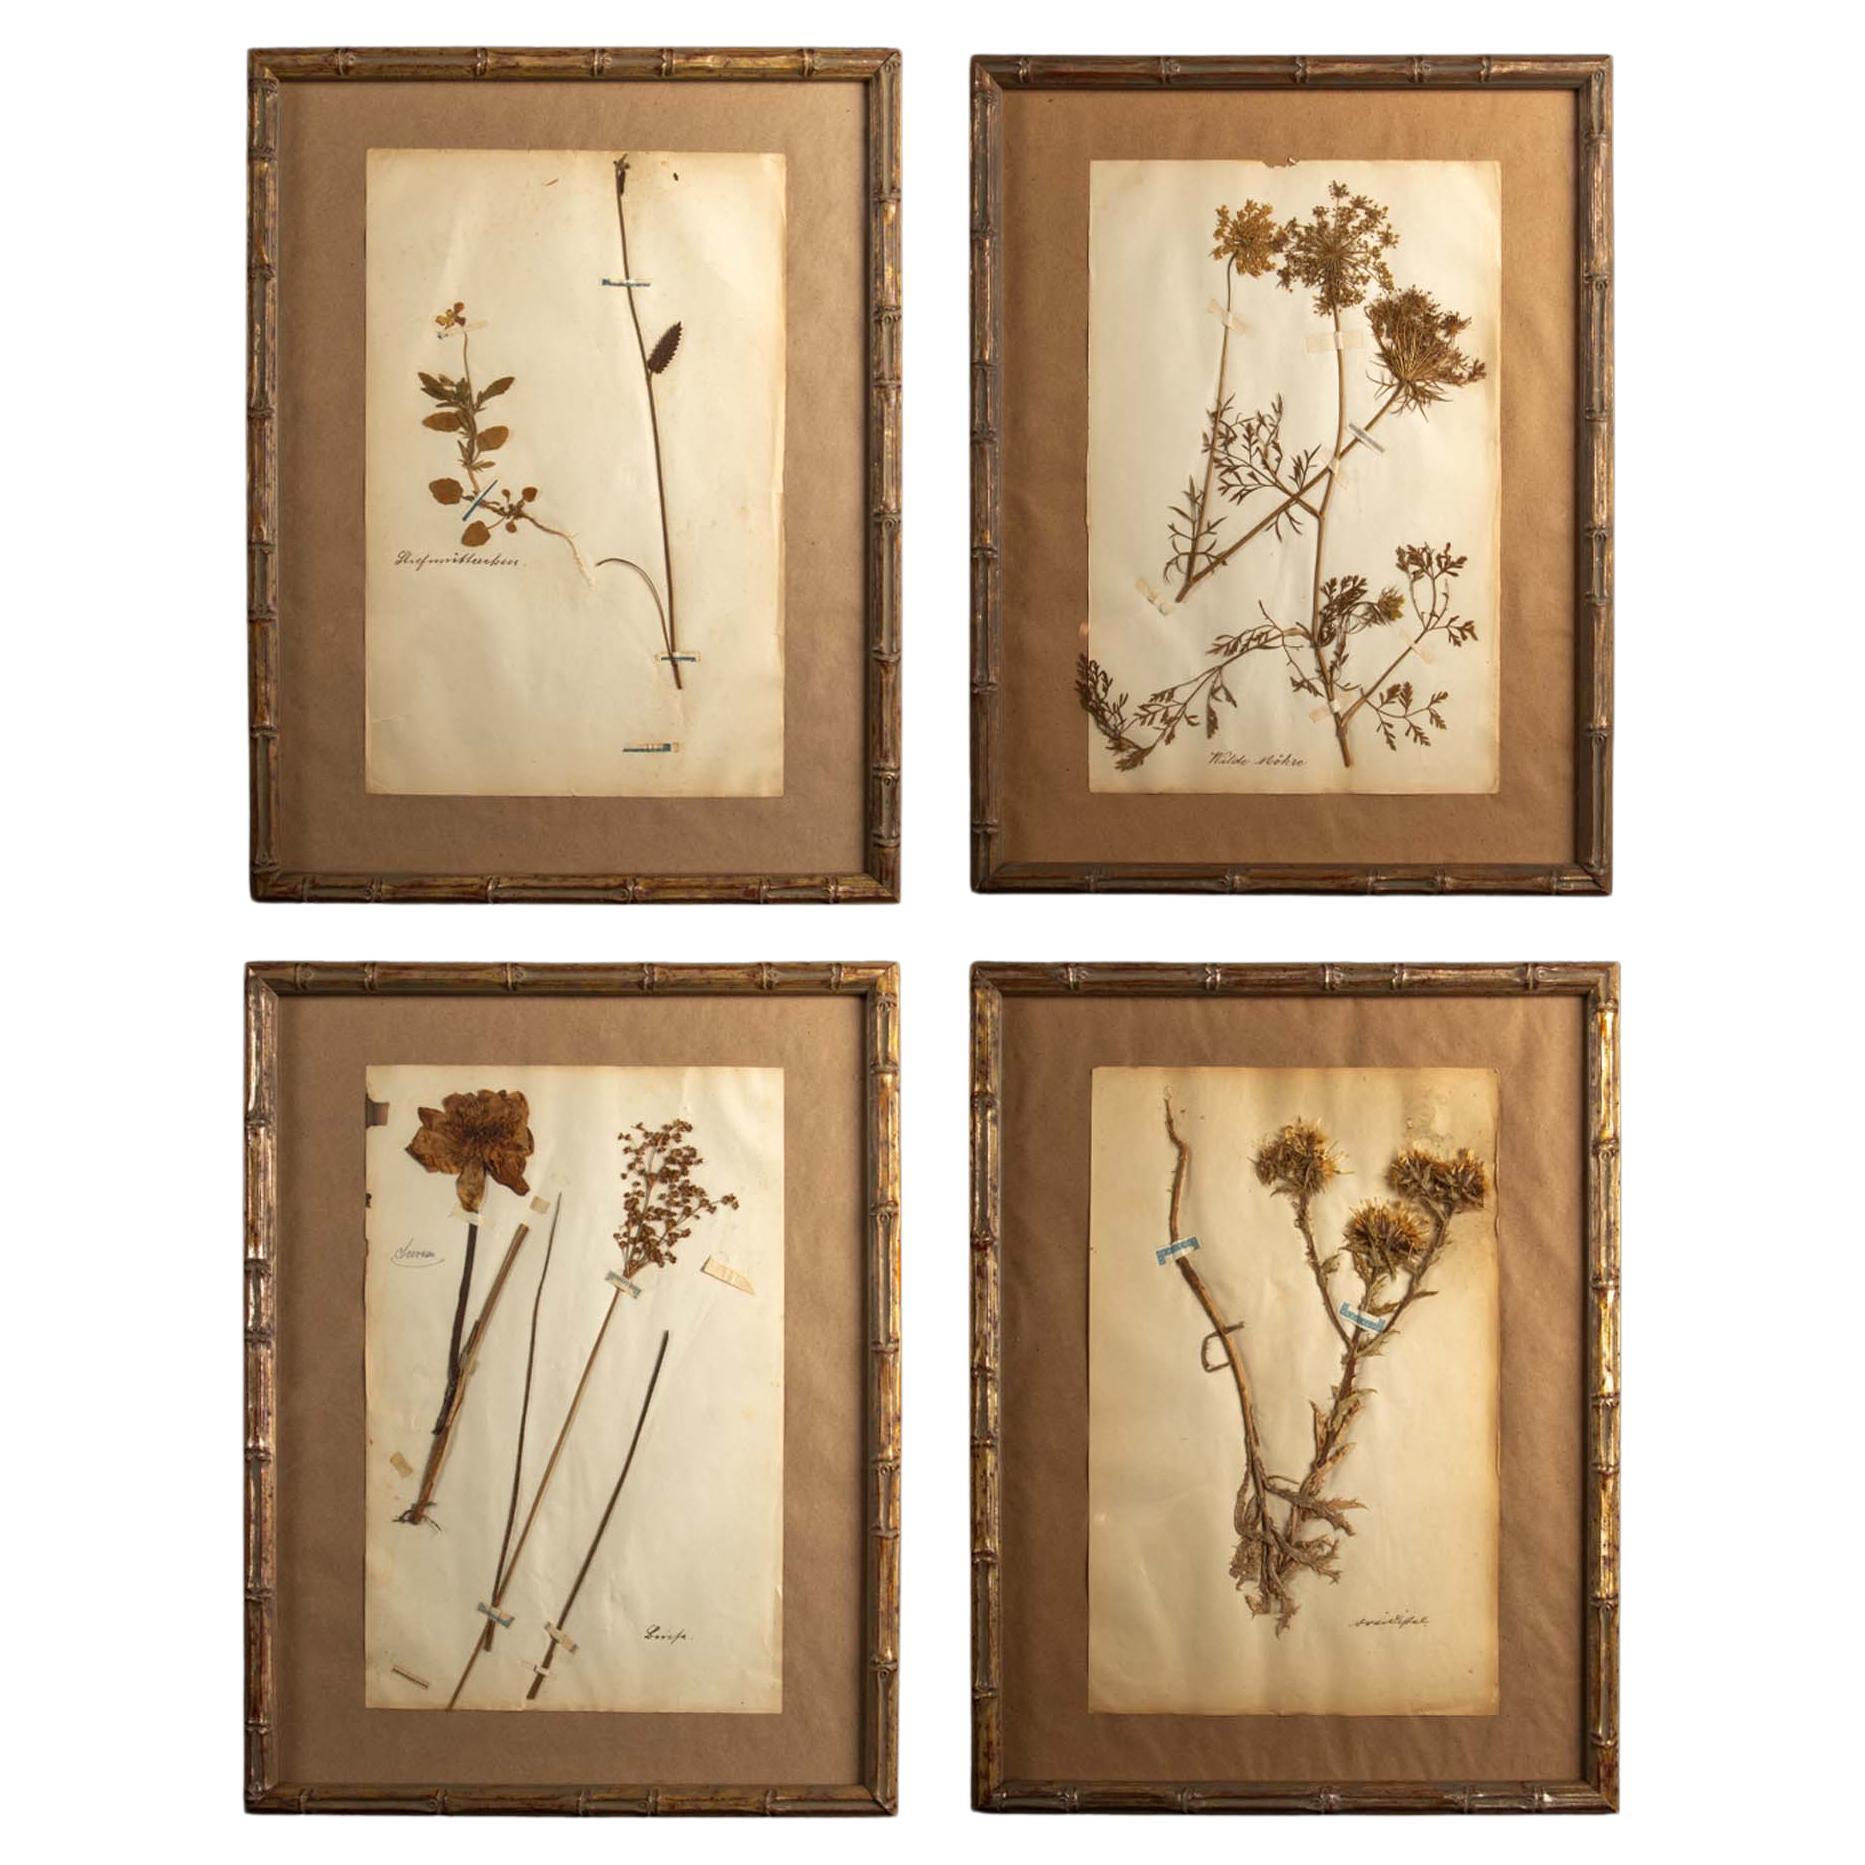 Vergoldete gerahmte botanische Herbier-Exemplare aus dem 19. Jahrhundert